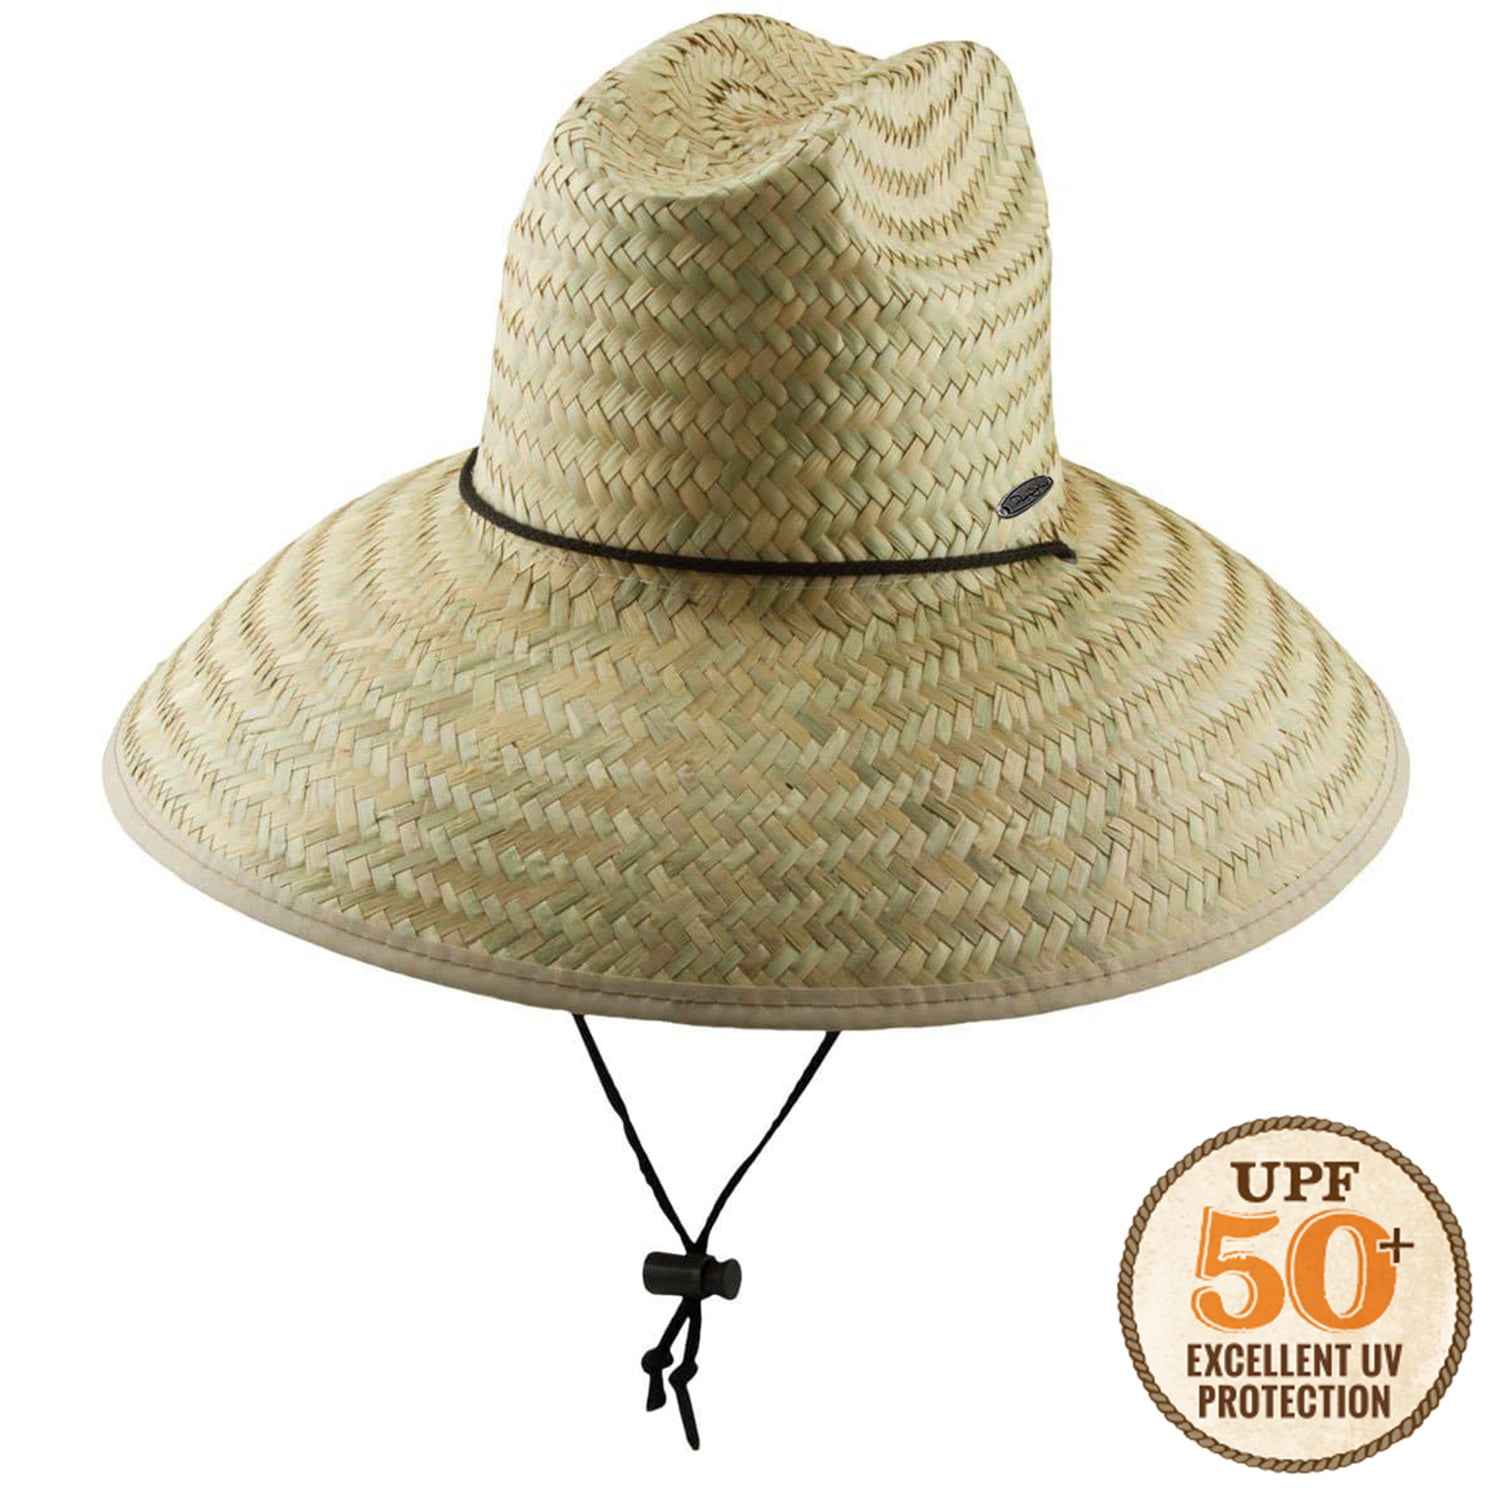 Panama Jack Lifeguard Sun Hat - Palm Fiber Straw, 5 Bound Big Brim, Chin  Strap with Toggle, Logo Badge (Natural, One Size Fits Most) 